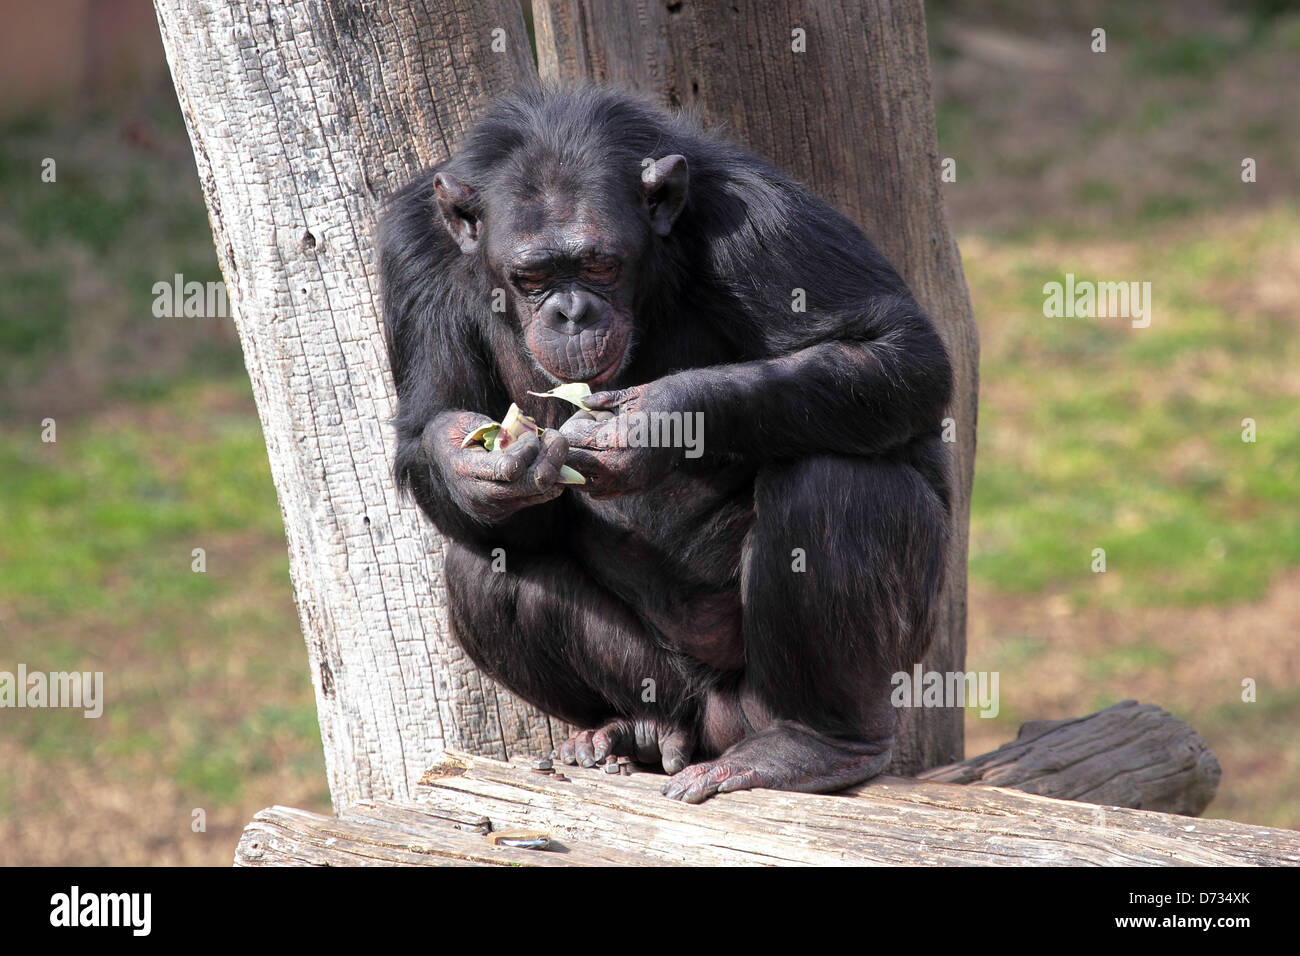 A chimpanzee (Pan Troglodytes) in a zoo, eating a vegetable Stock Photo